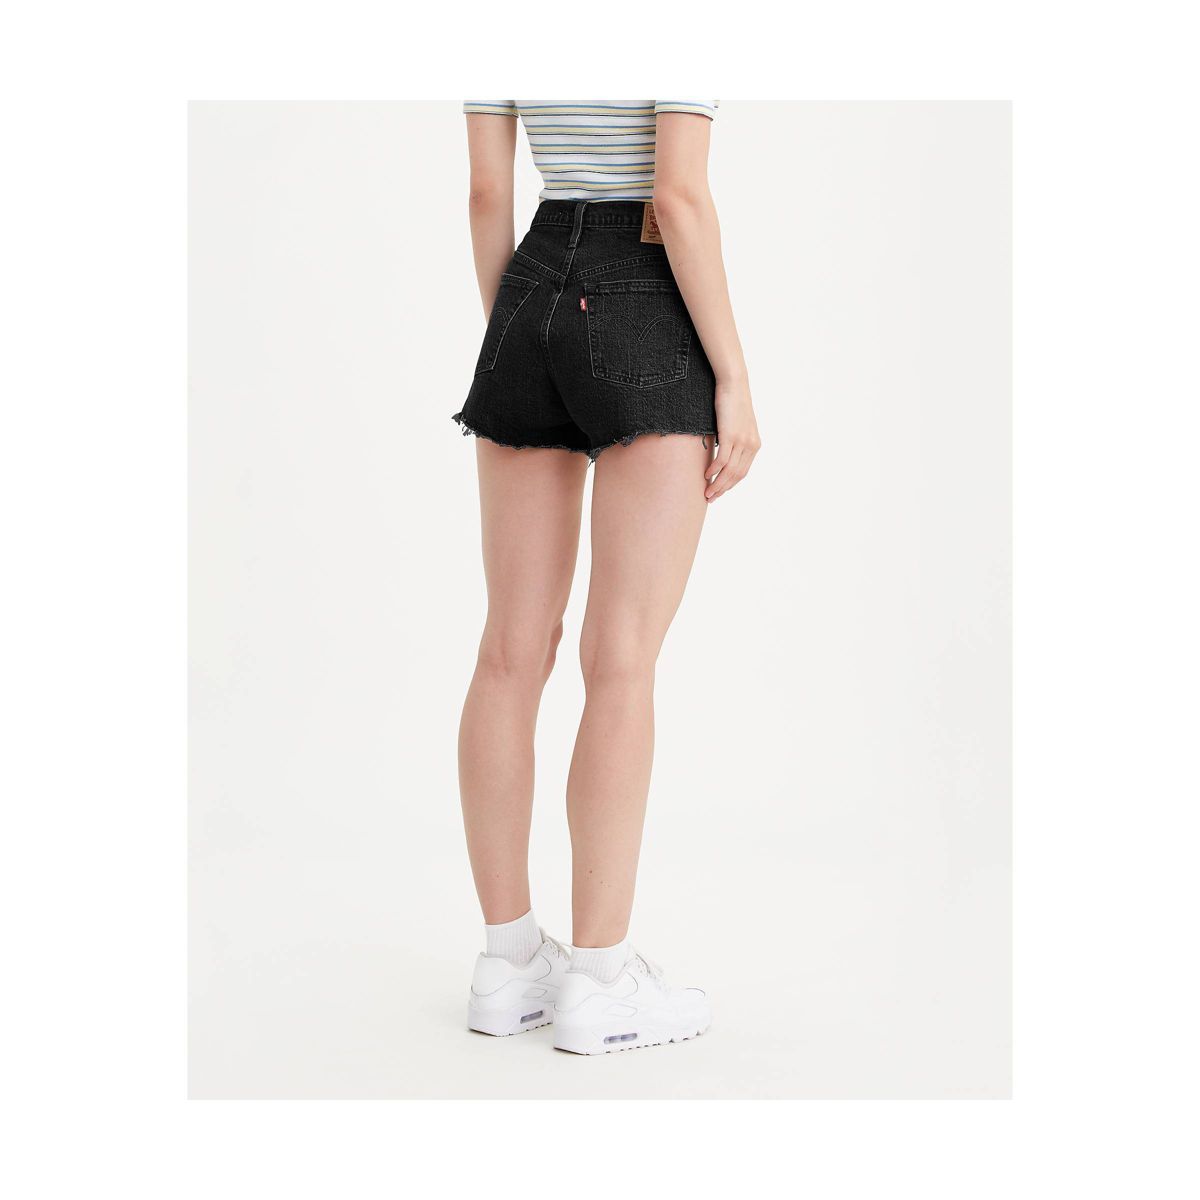 Levi's 501® Original Fit High-Rise Women's Jean Shorts | Target